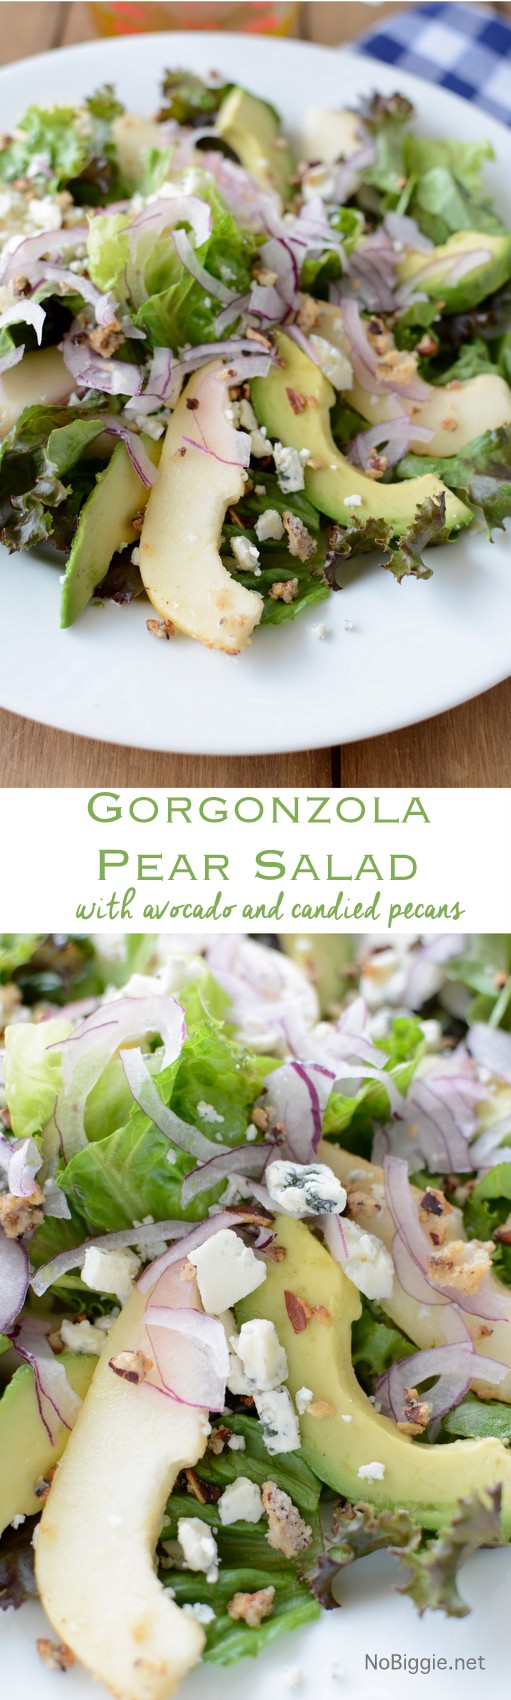 http://www.nobiggie.net/wp-content/uploads/2015/05/Gorgonzola-Pear-Salad-with-candied-pecans-NoBiggie.net_.jpg